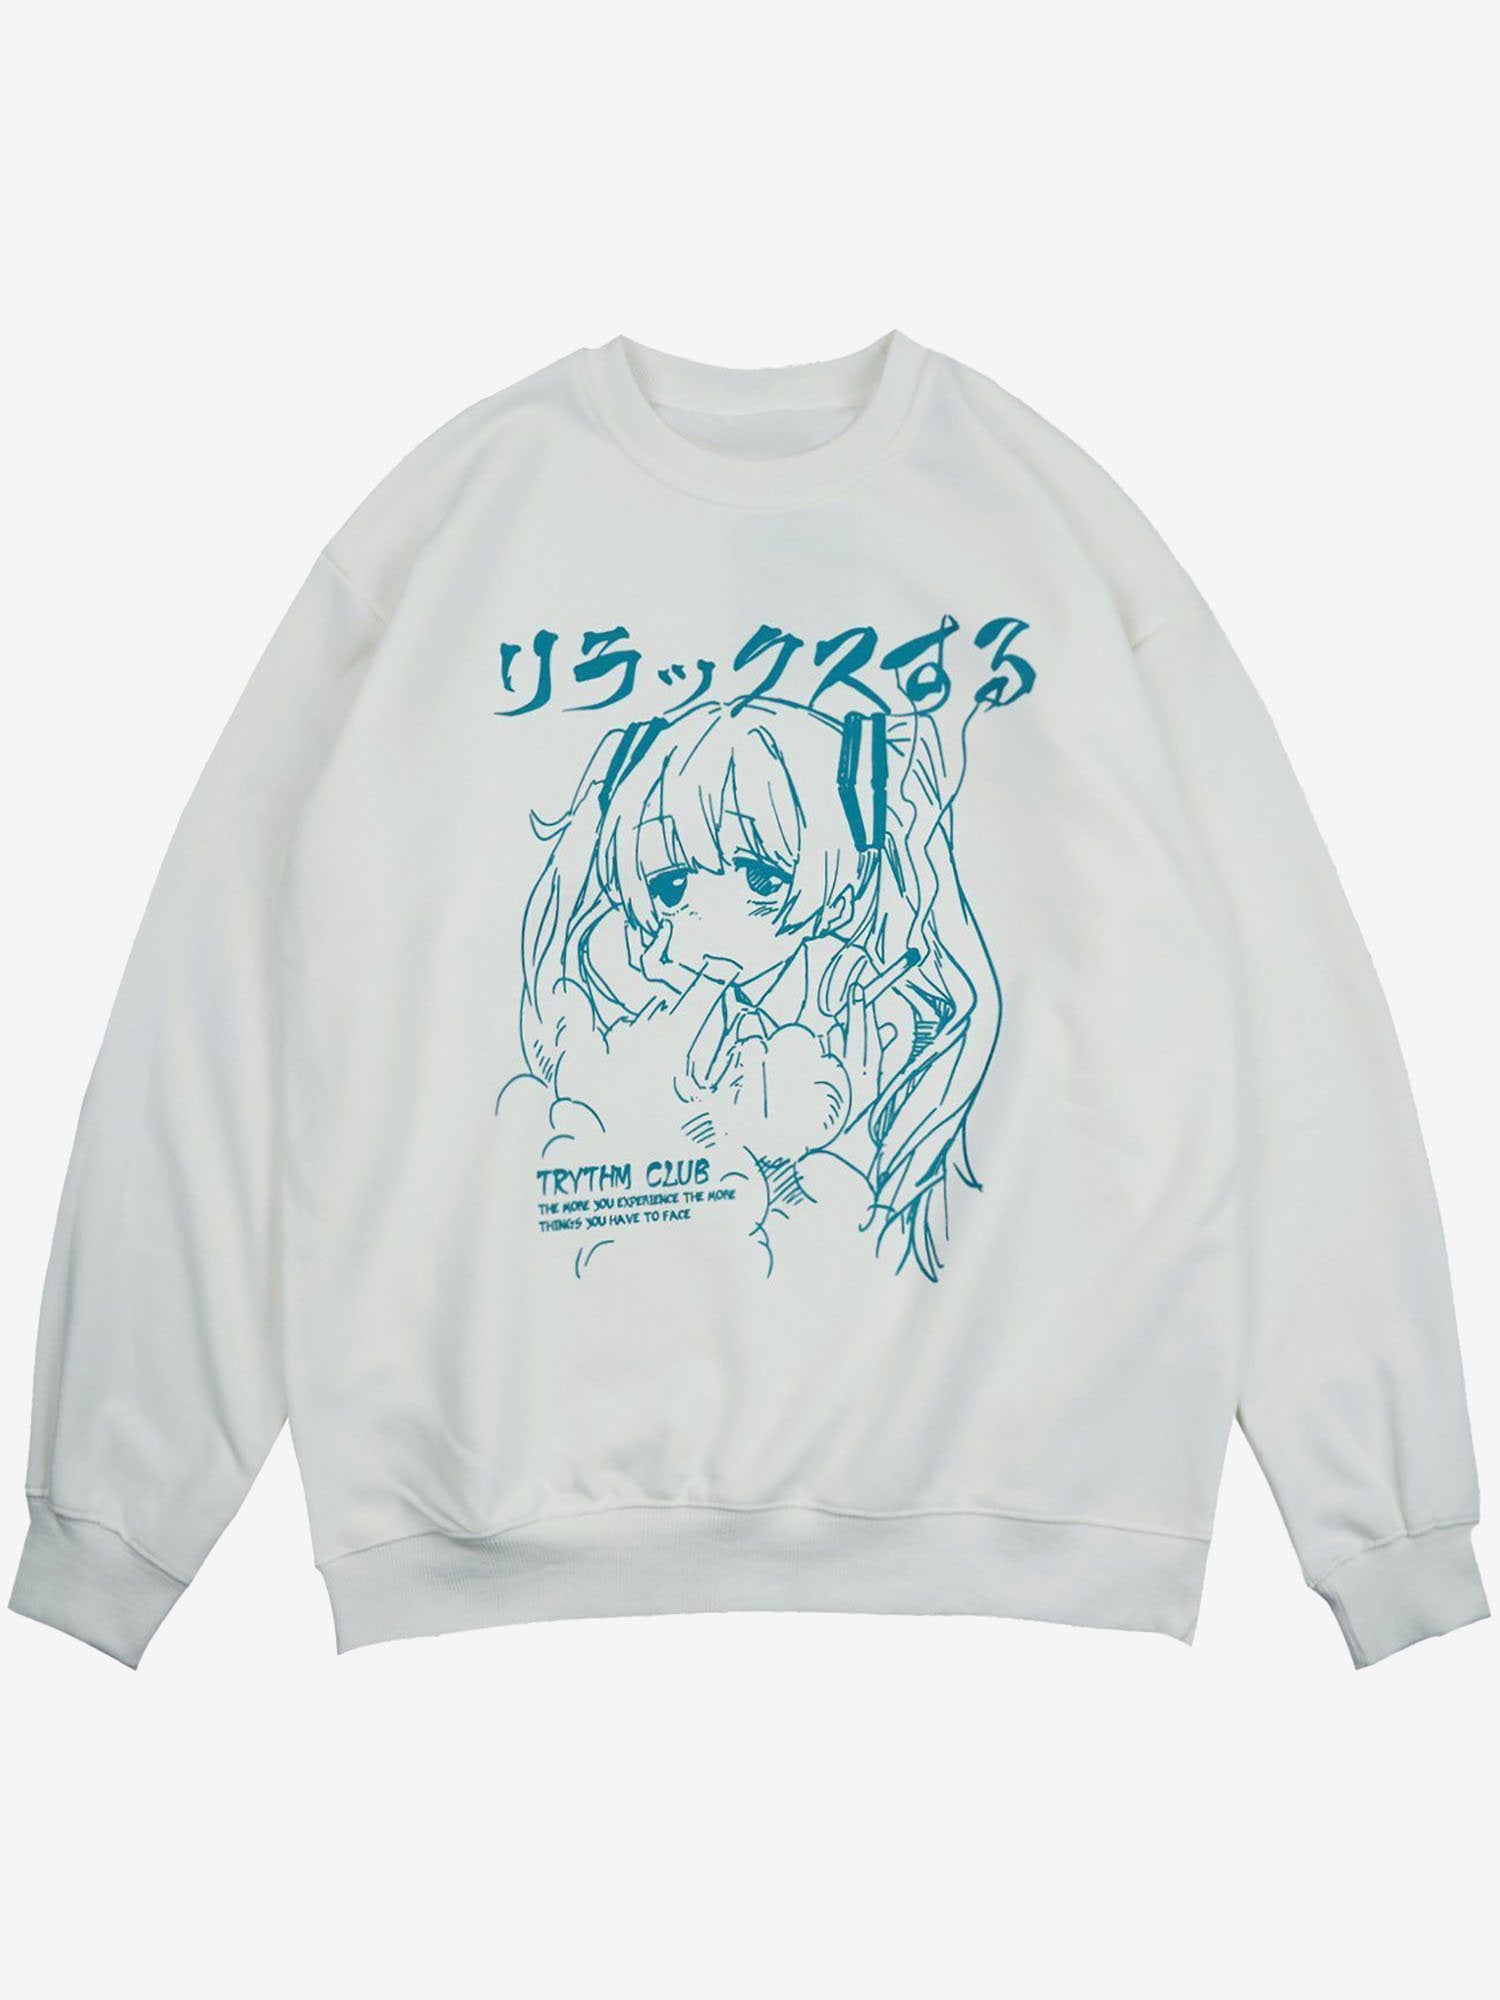 Justnotag Sweat-shirt à imprimé japonais Cartoon Anime Girl